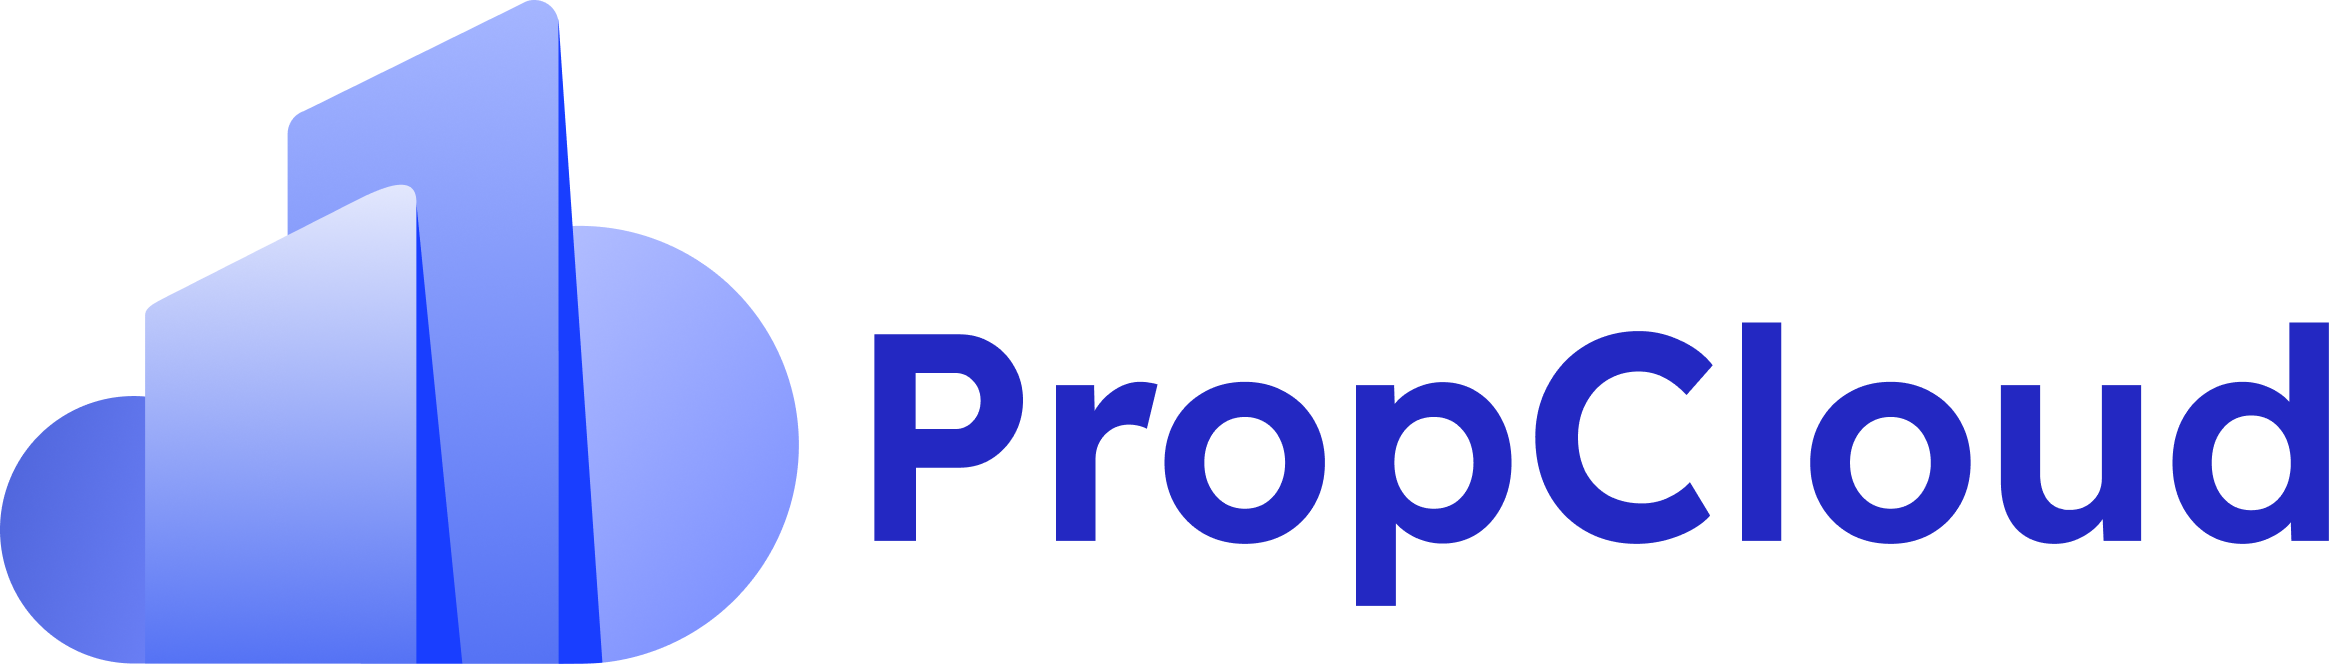 propcloud logo